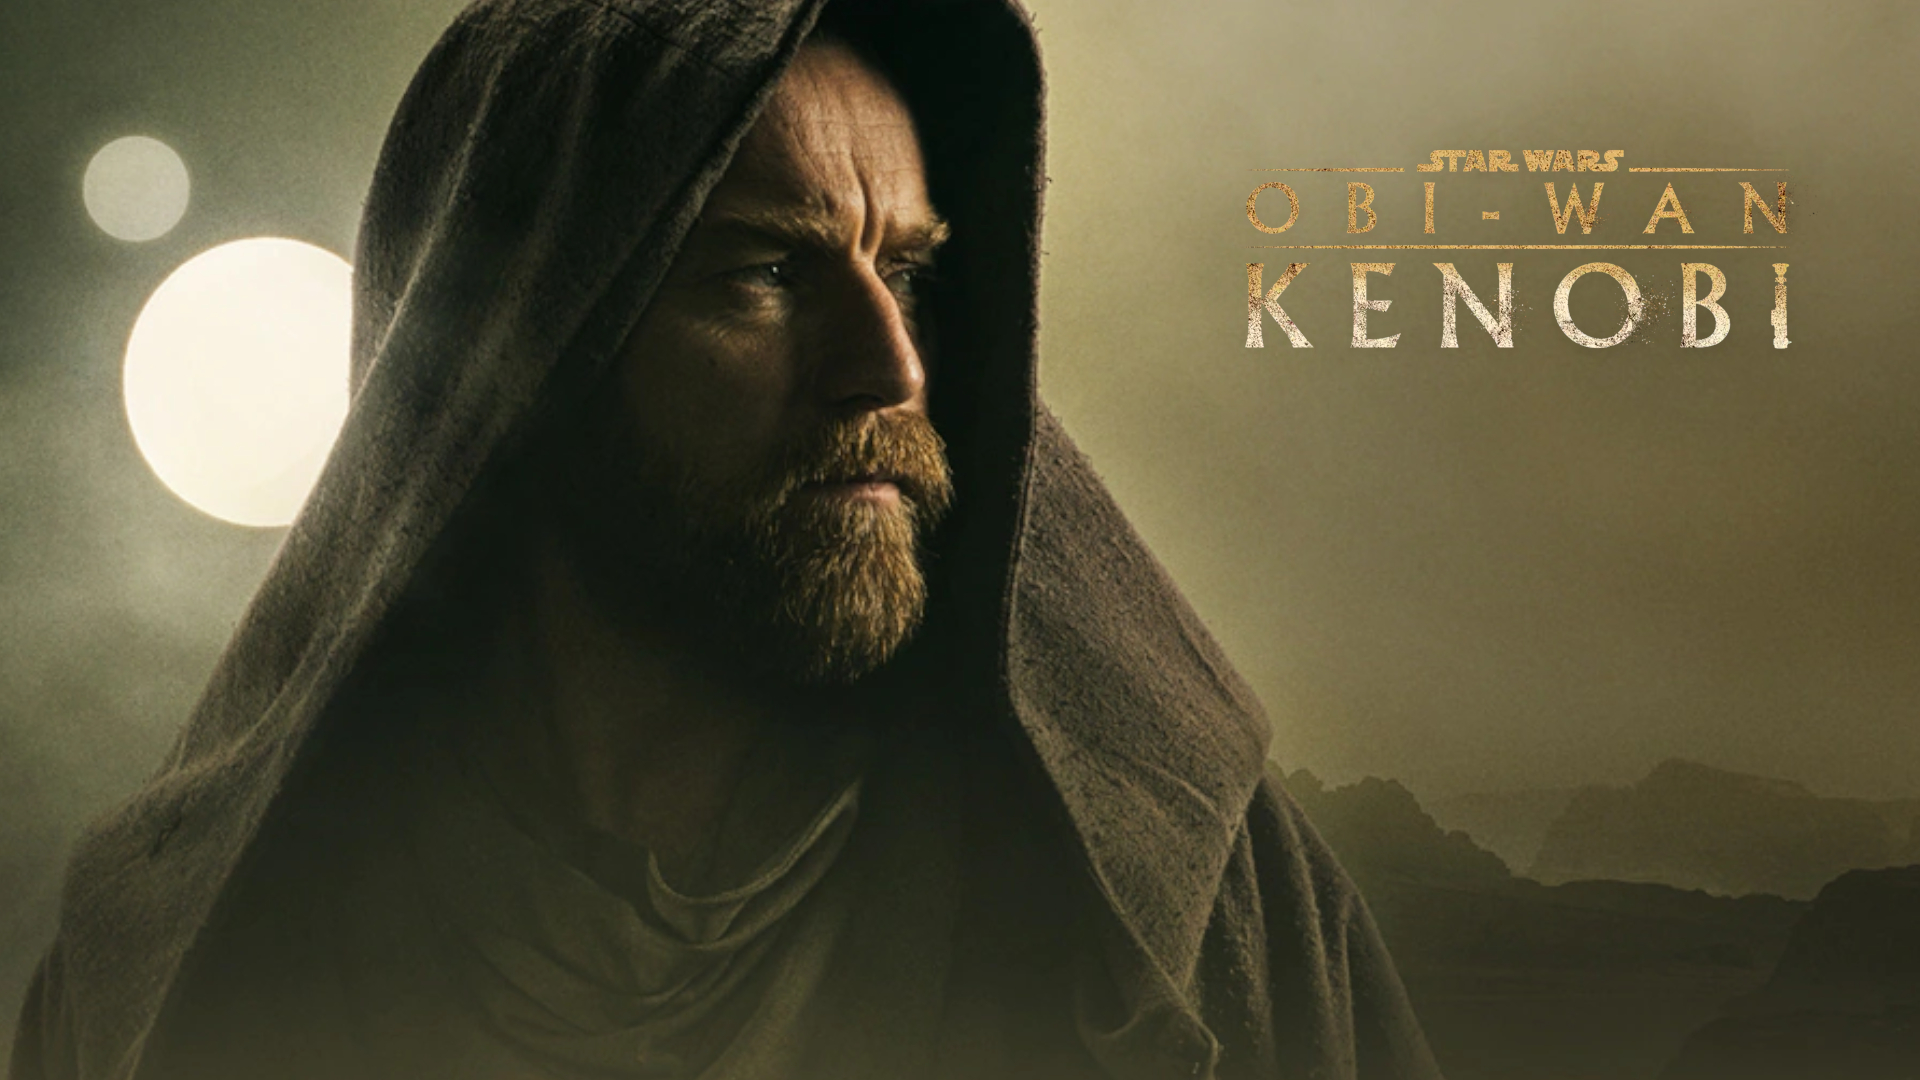 How To Watch Obi Wan Kenobi Online